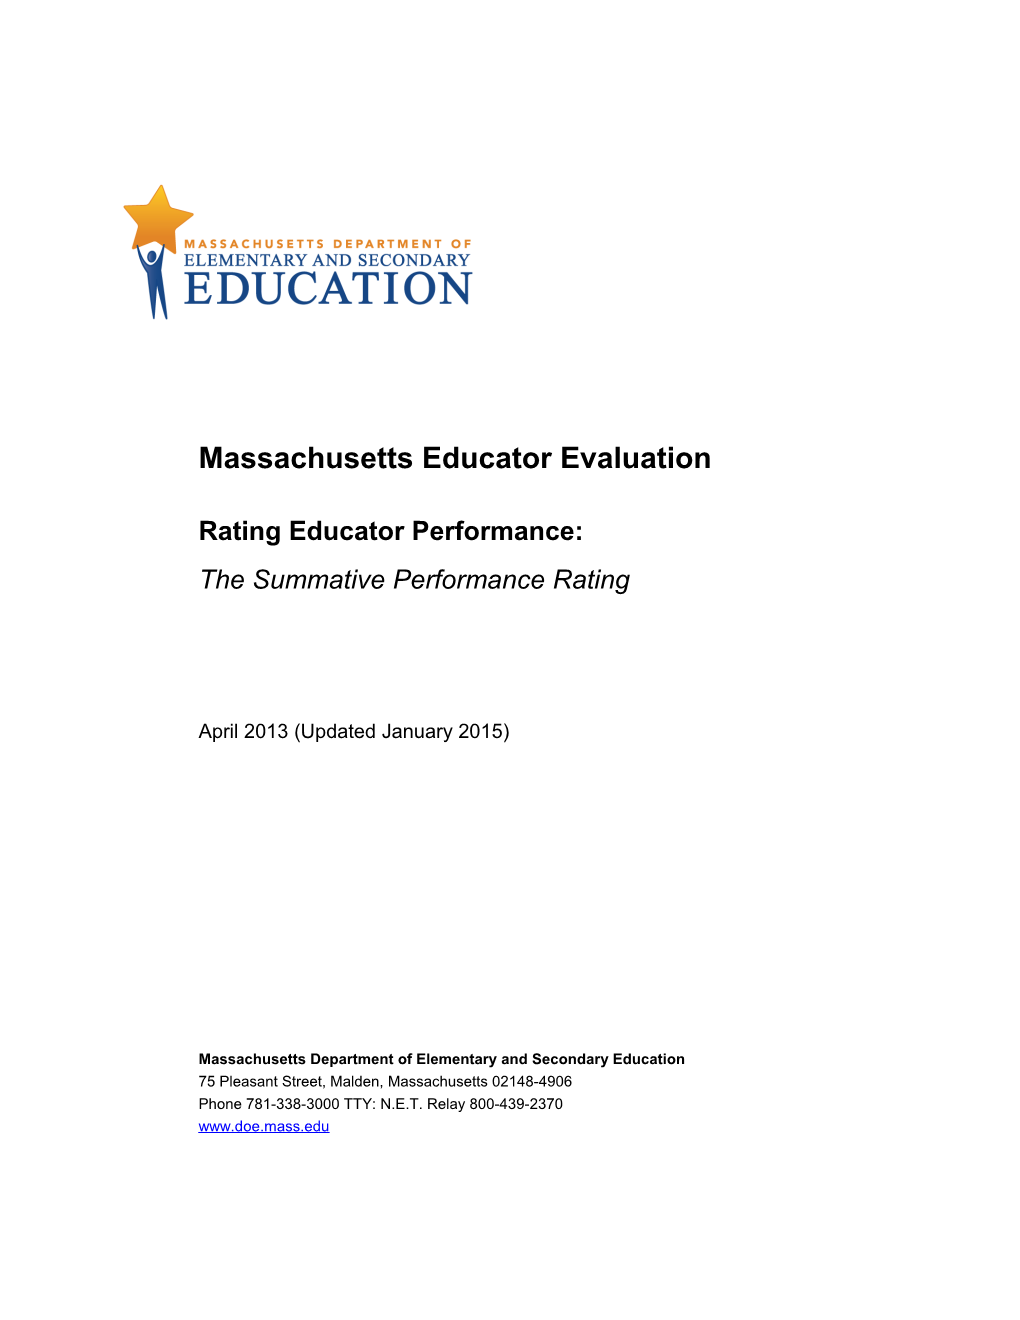 Rating Educator Performance - MA Educator Evaluation